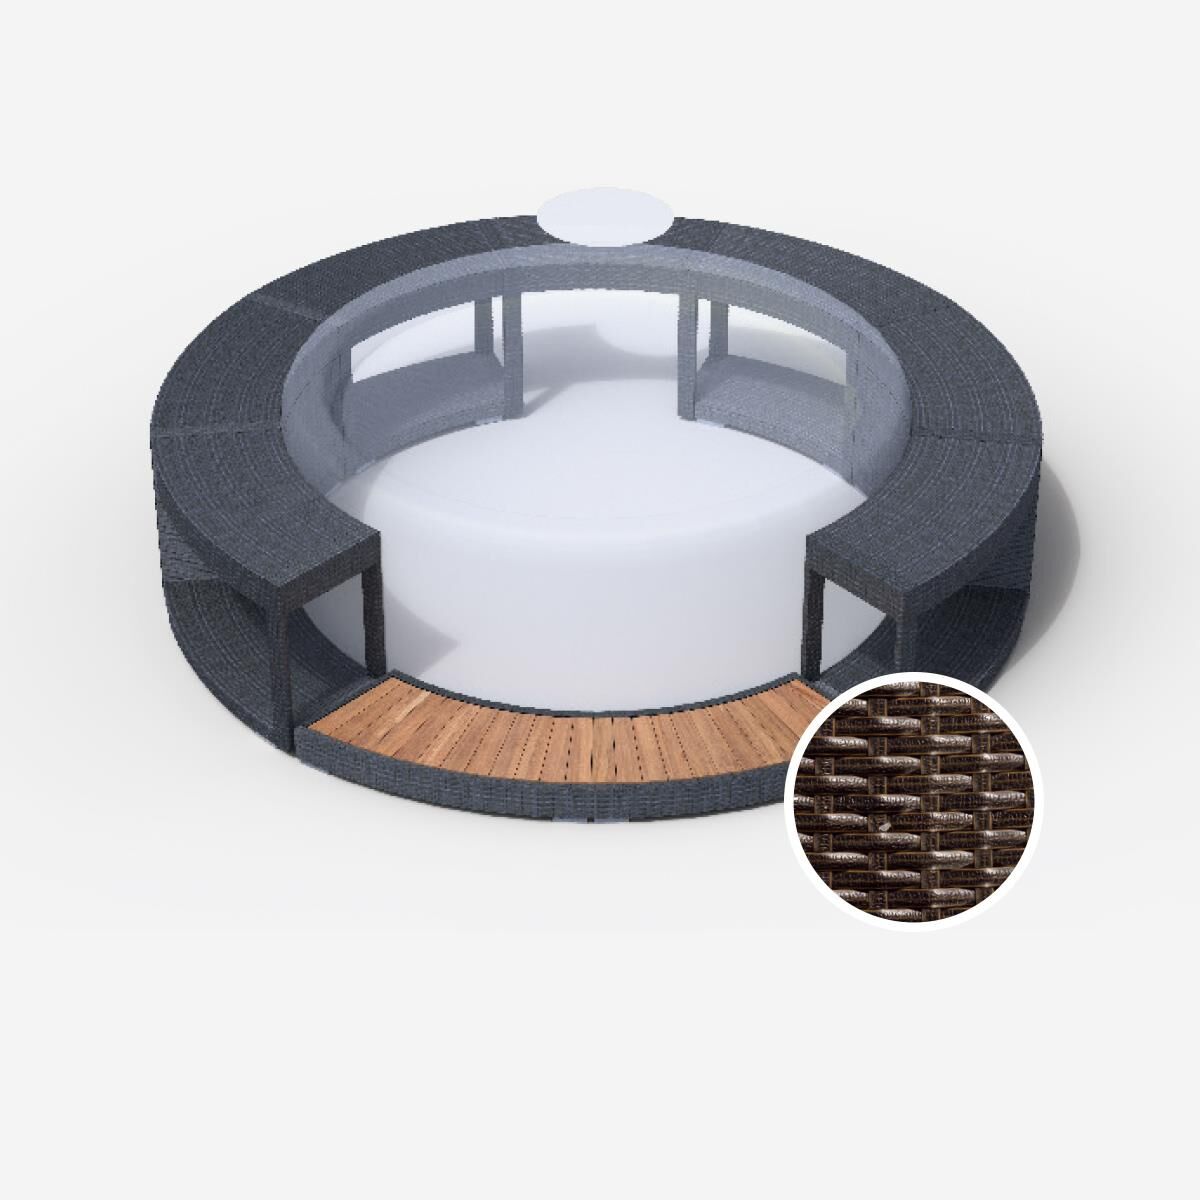 Whirlpool-Vollumrandung für Softub RESORT / POSEIDON - Polyrattan - ø 290 cm - mocca